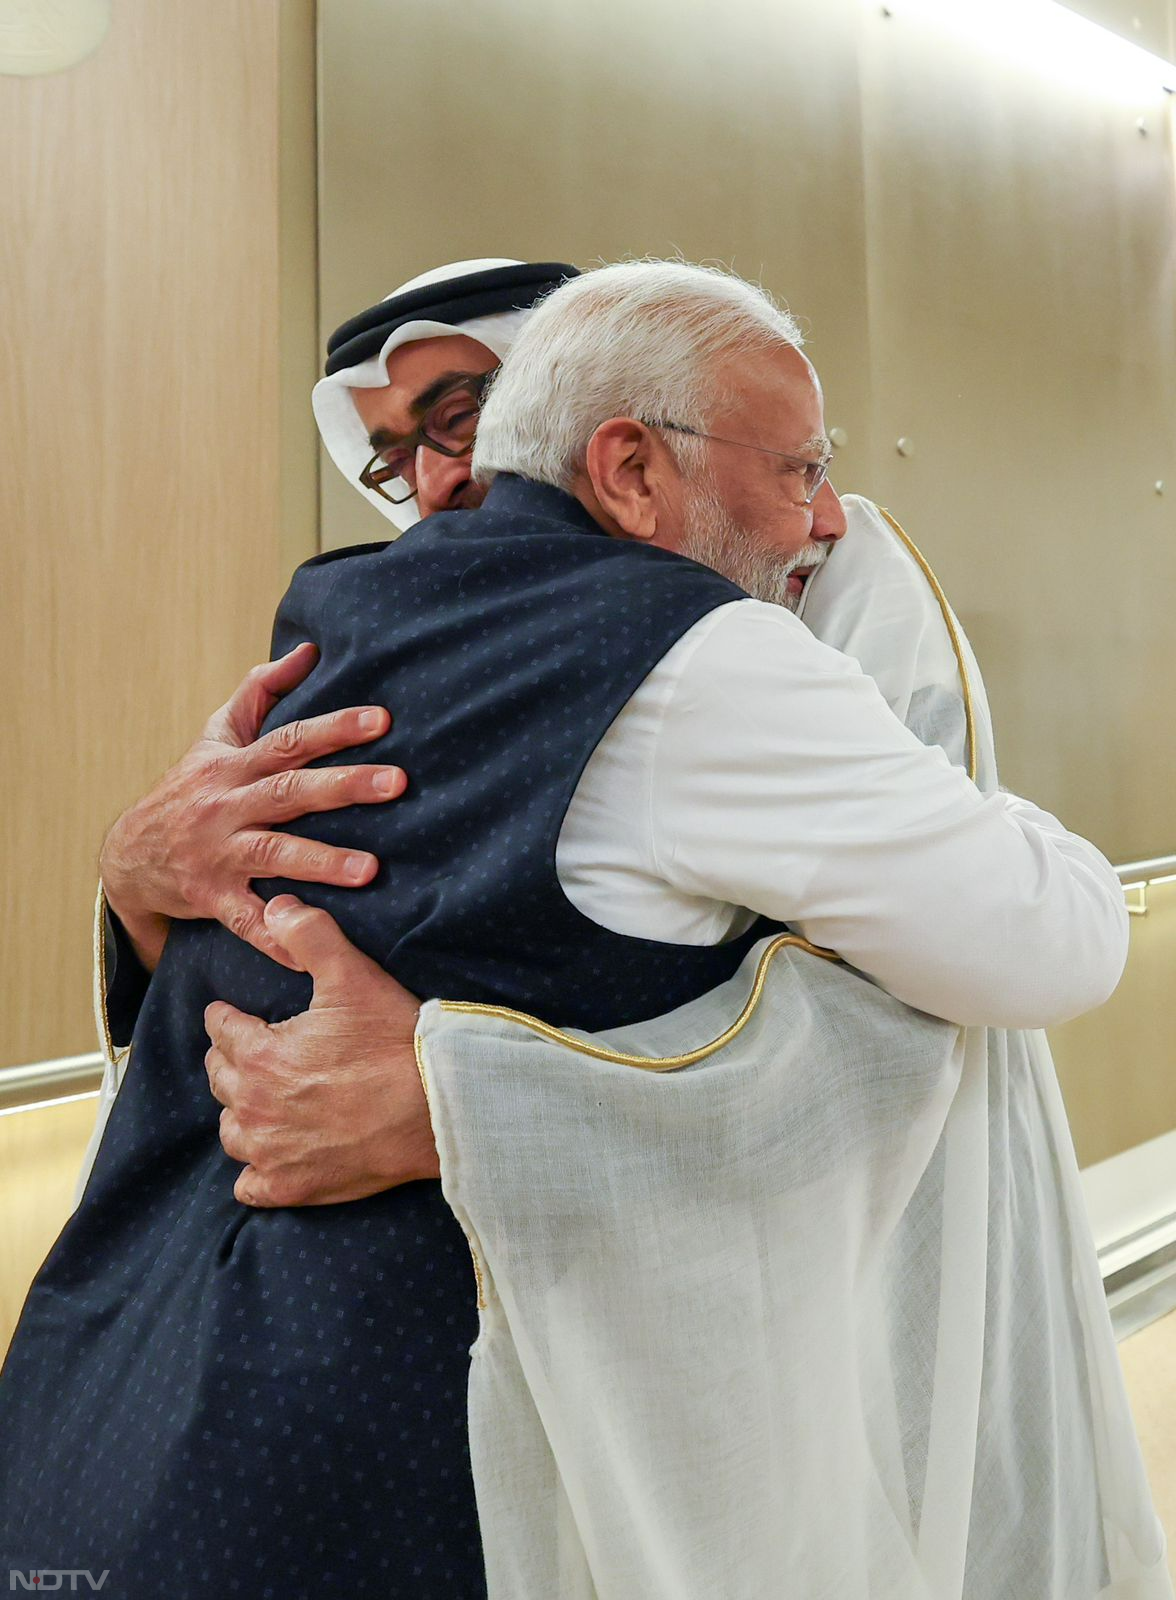 PM Modi Lands In UAE, Holds Talks With President Sheikh Mohamed bin Zayed